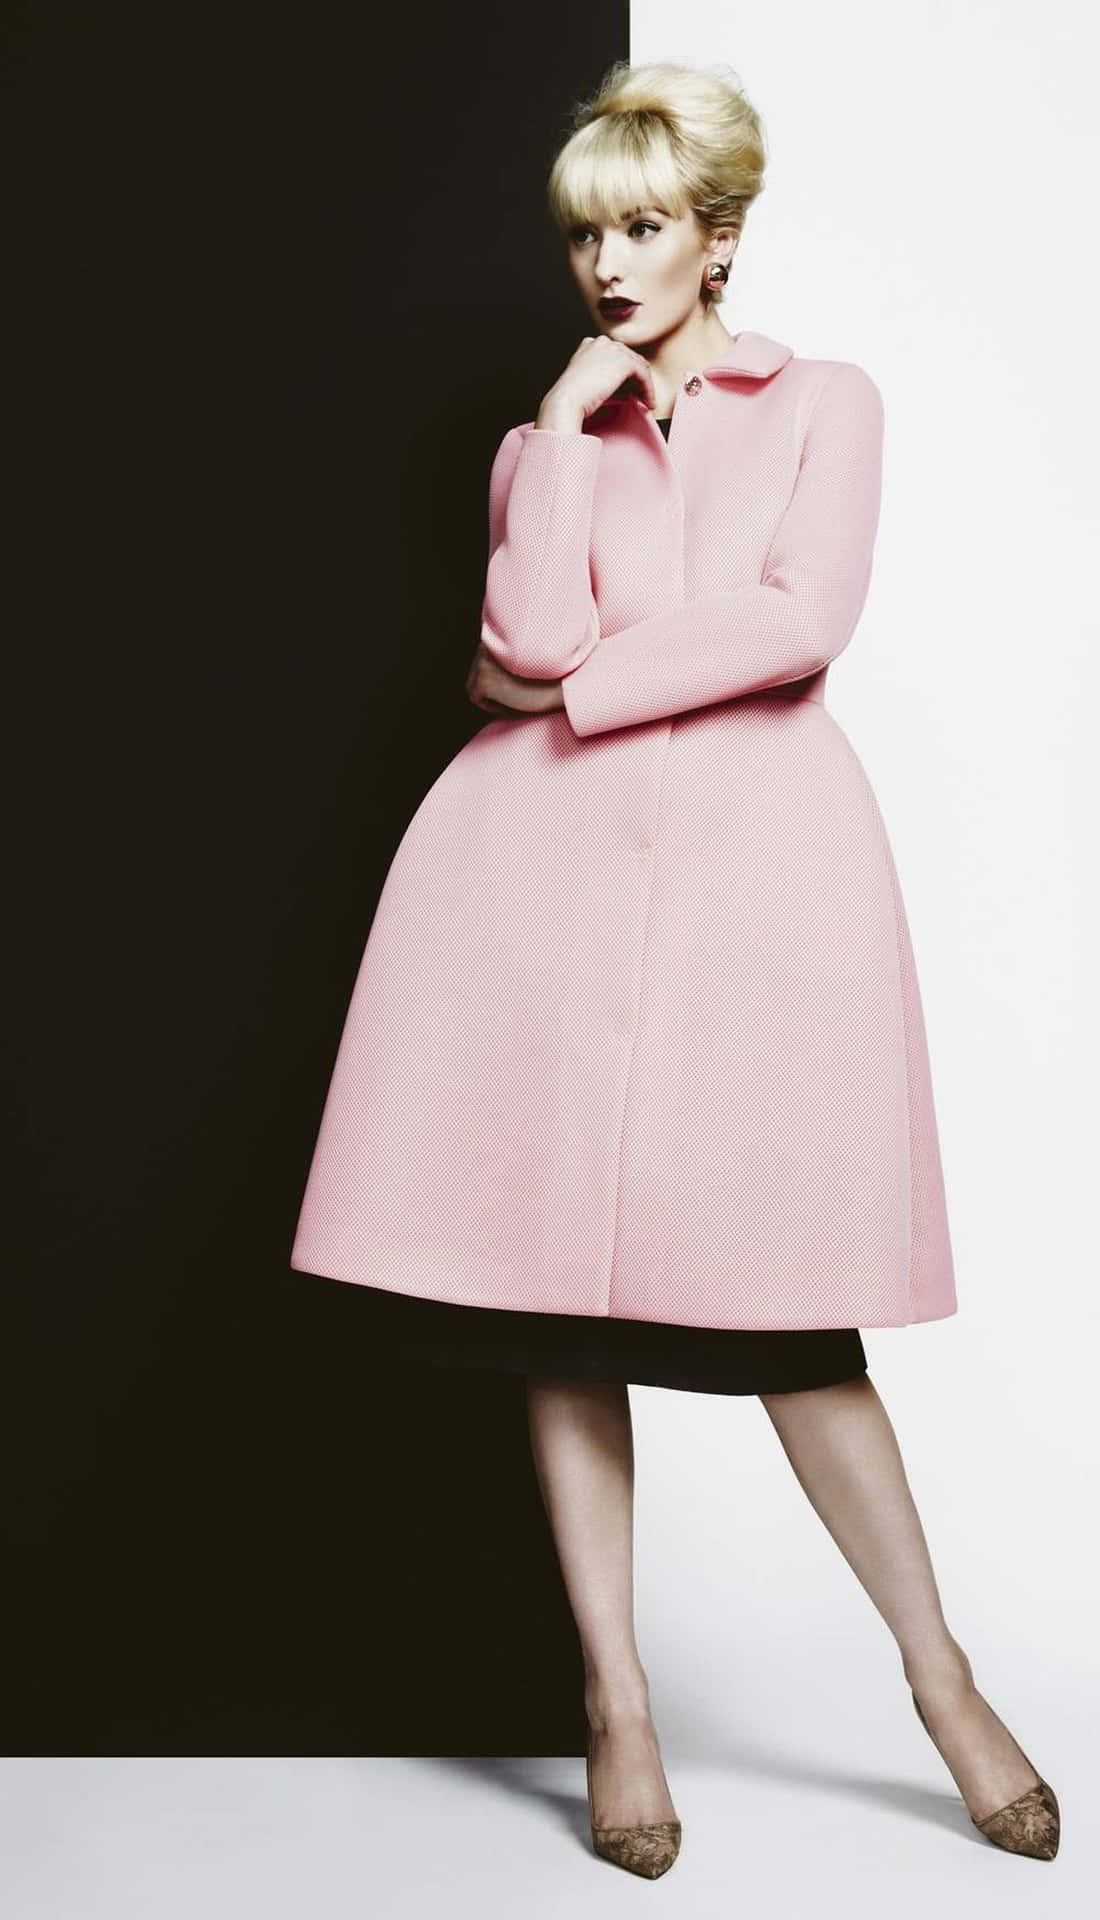 Stylish woman wearing an elegant pink coat Wallpaper